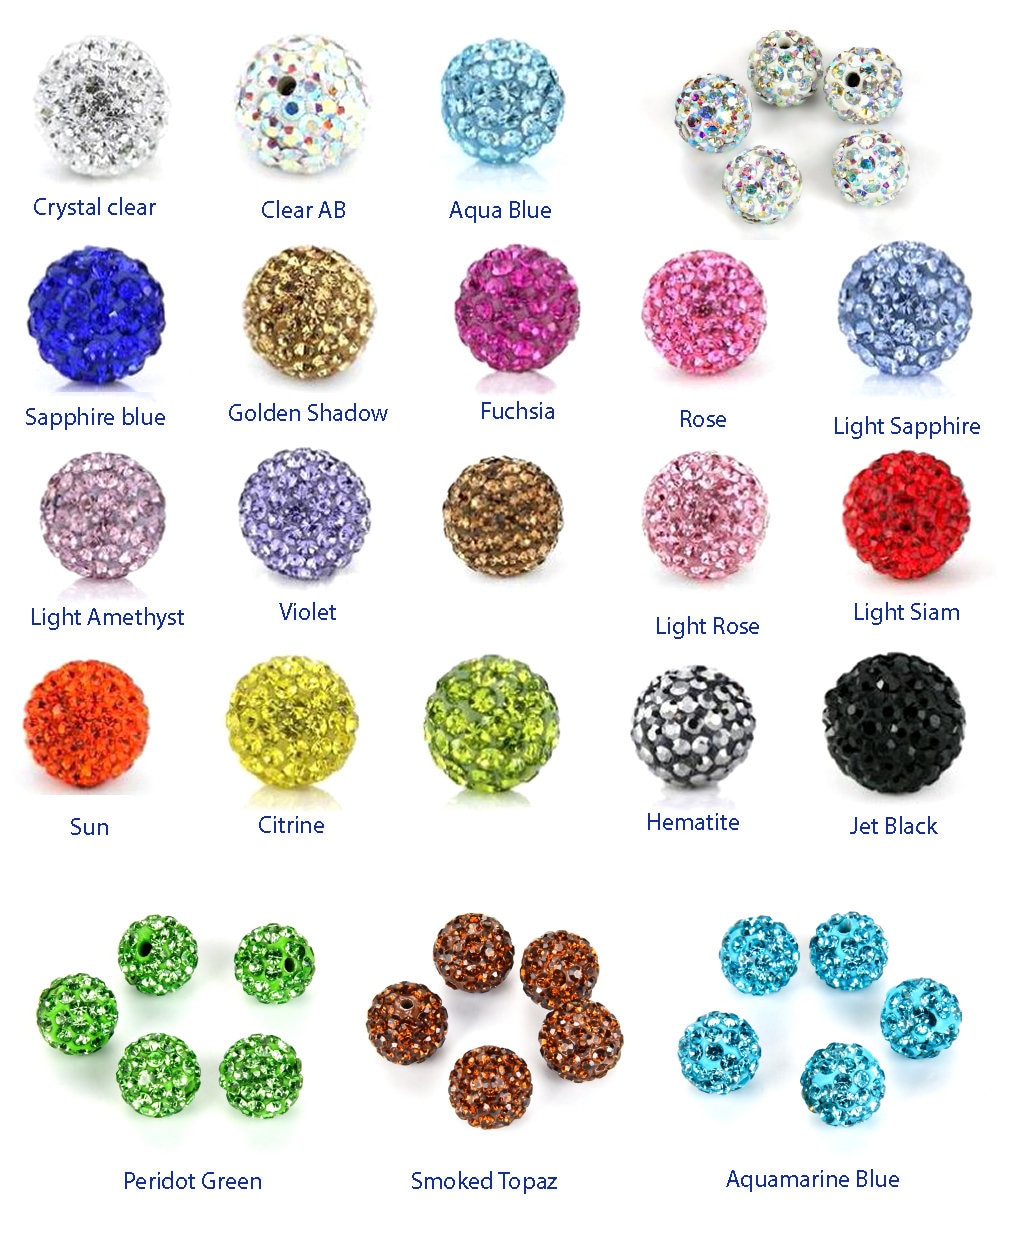 14mm Flower Claw Rhinestones Glitter Crystals Pearl Stones Beads